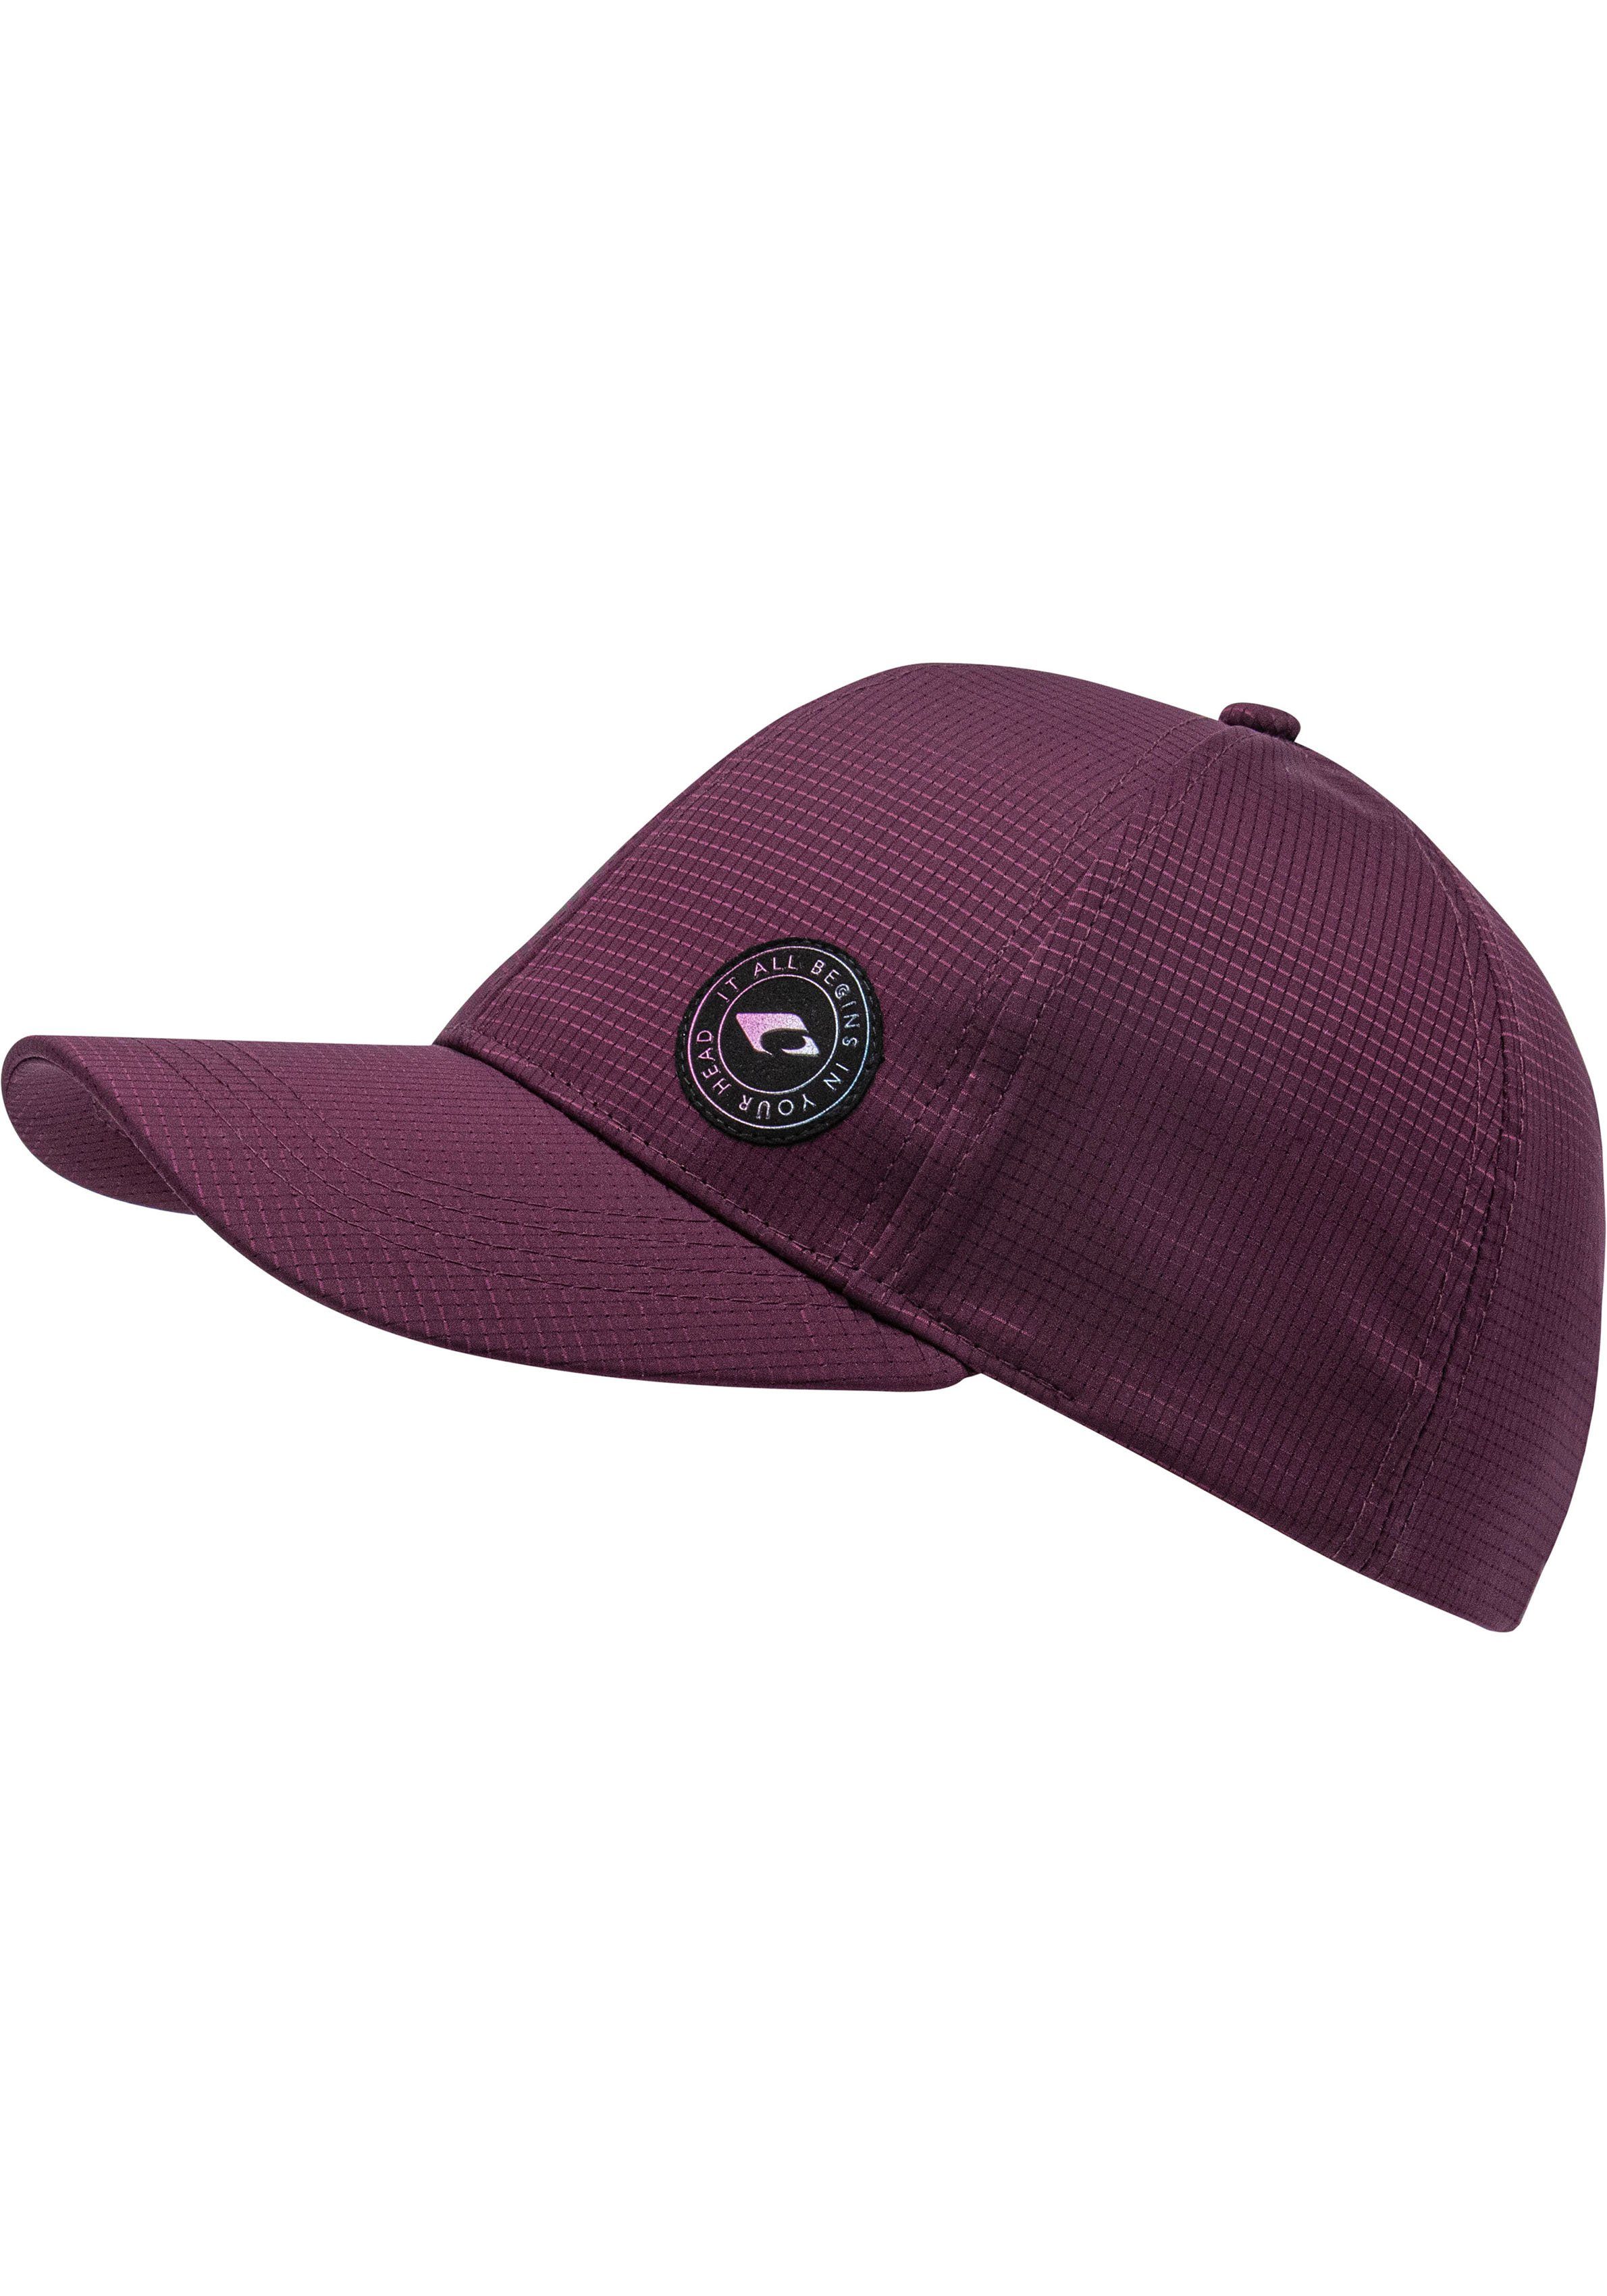 chillouts Baseball Cap Langley verstellbar Hat, Individuell